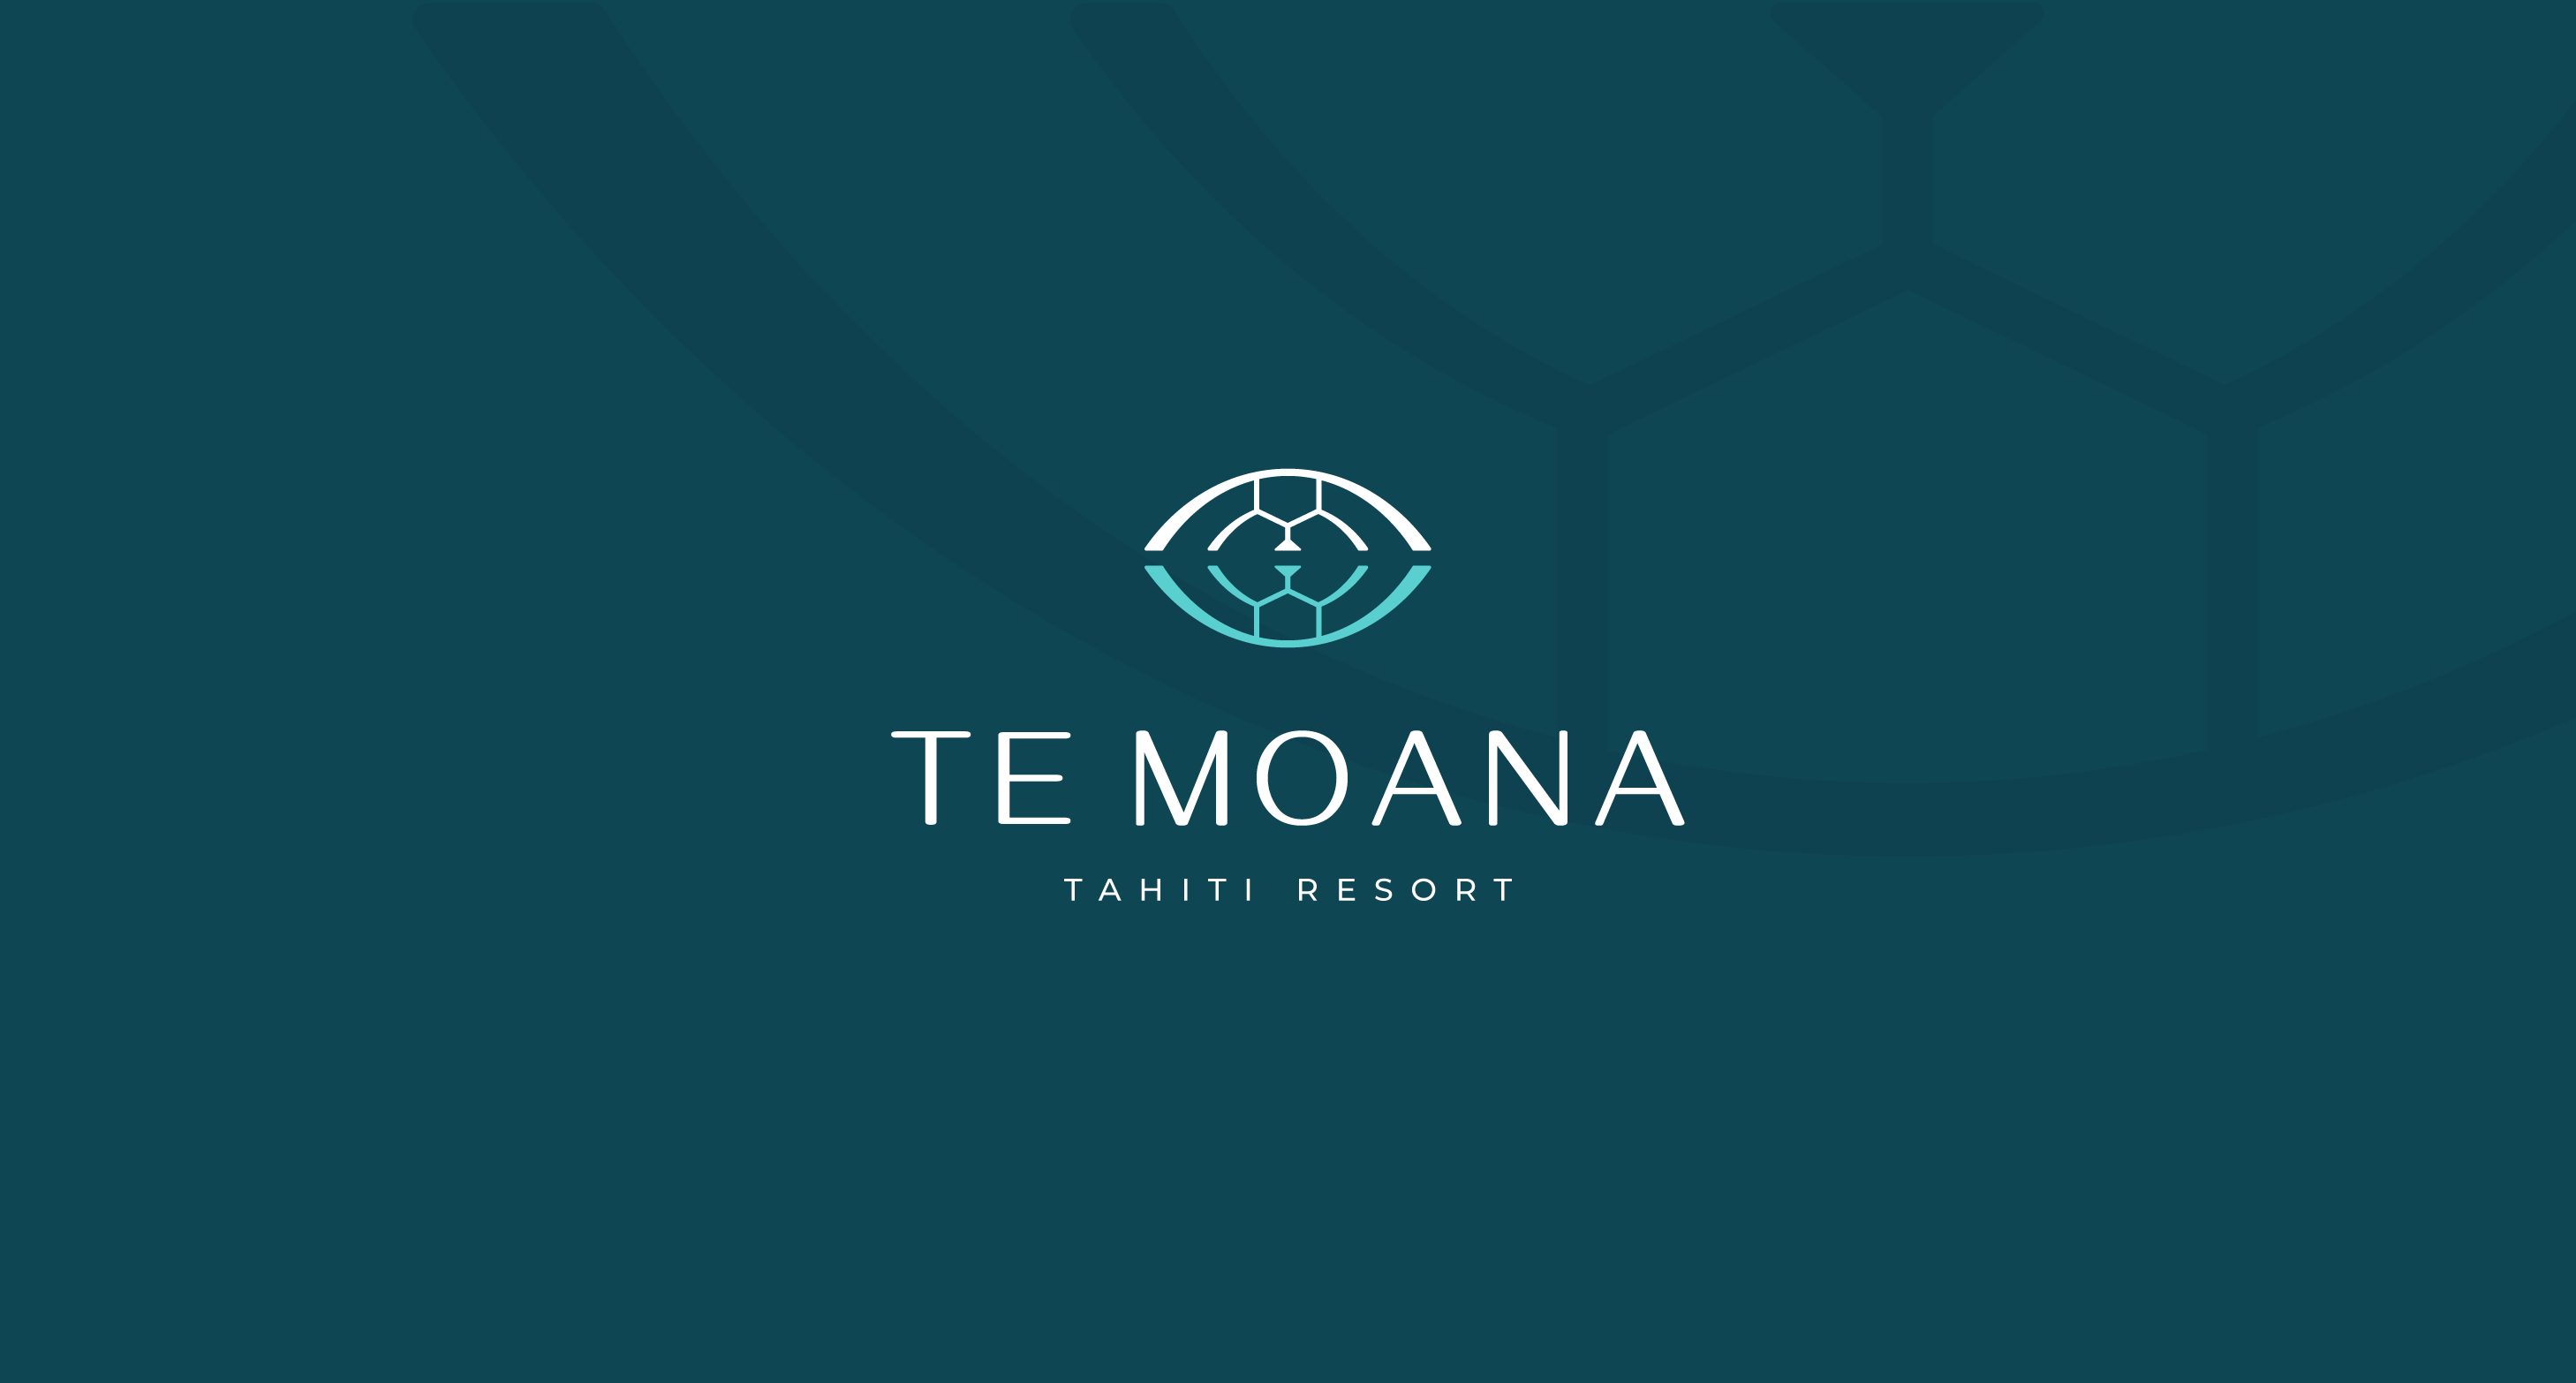 Logotype Te Moana